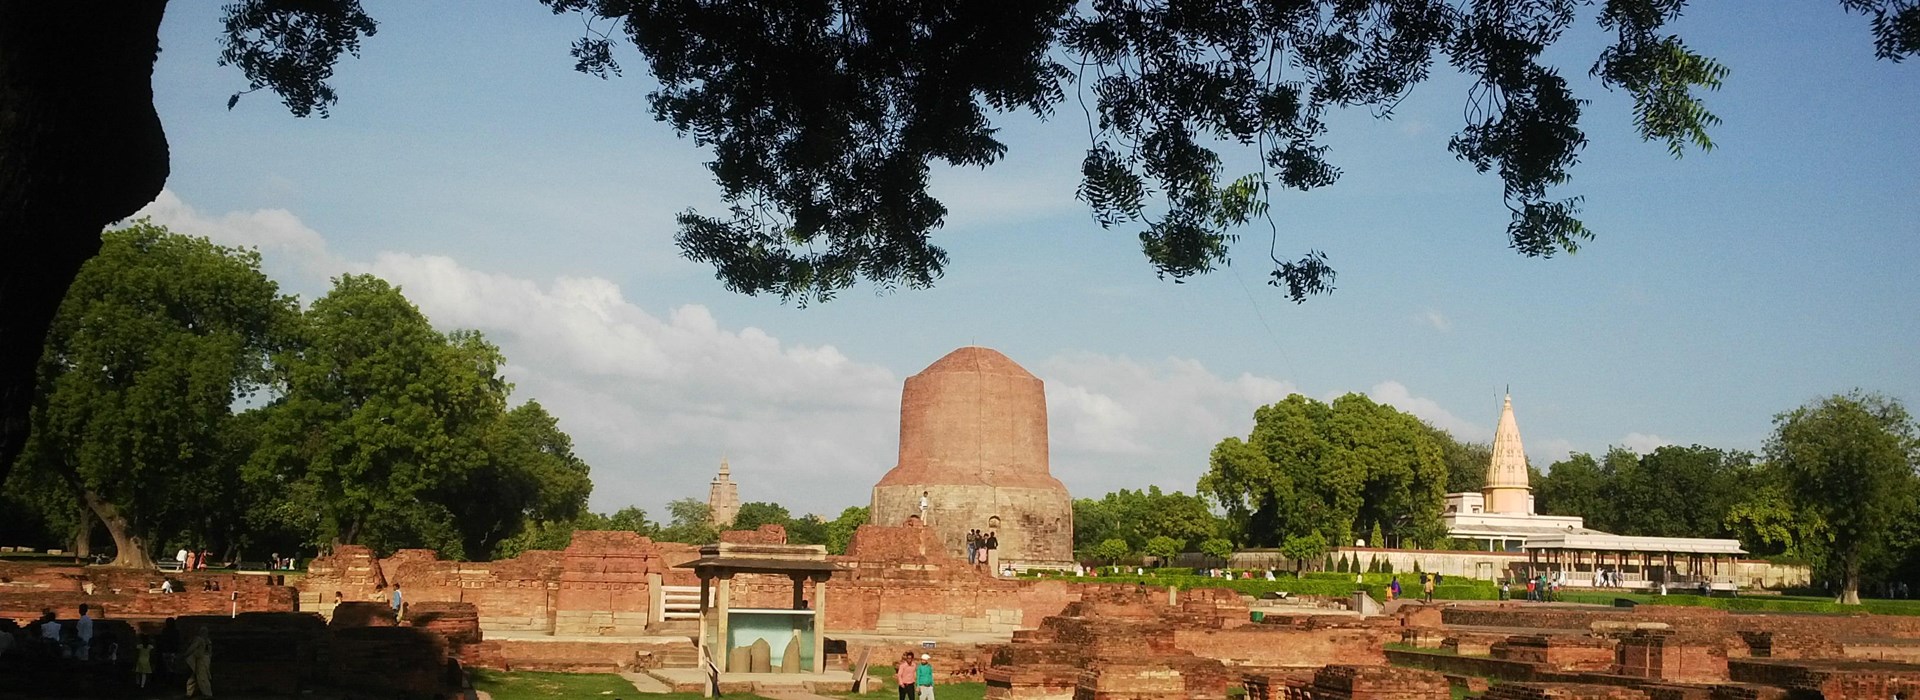 Visiter La cité de Sarnath - Inde